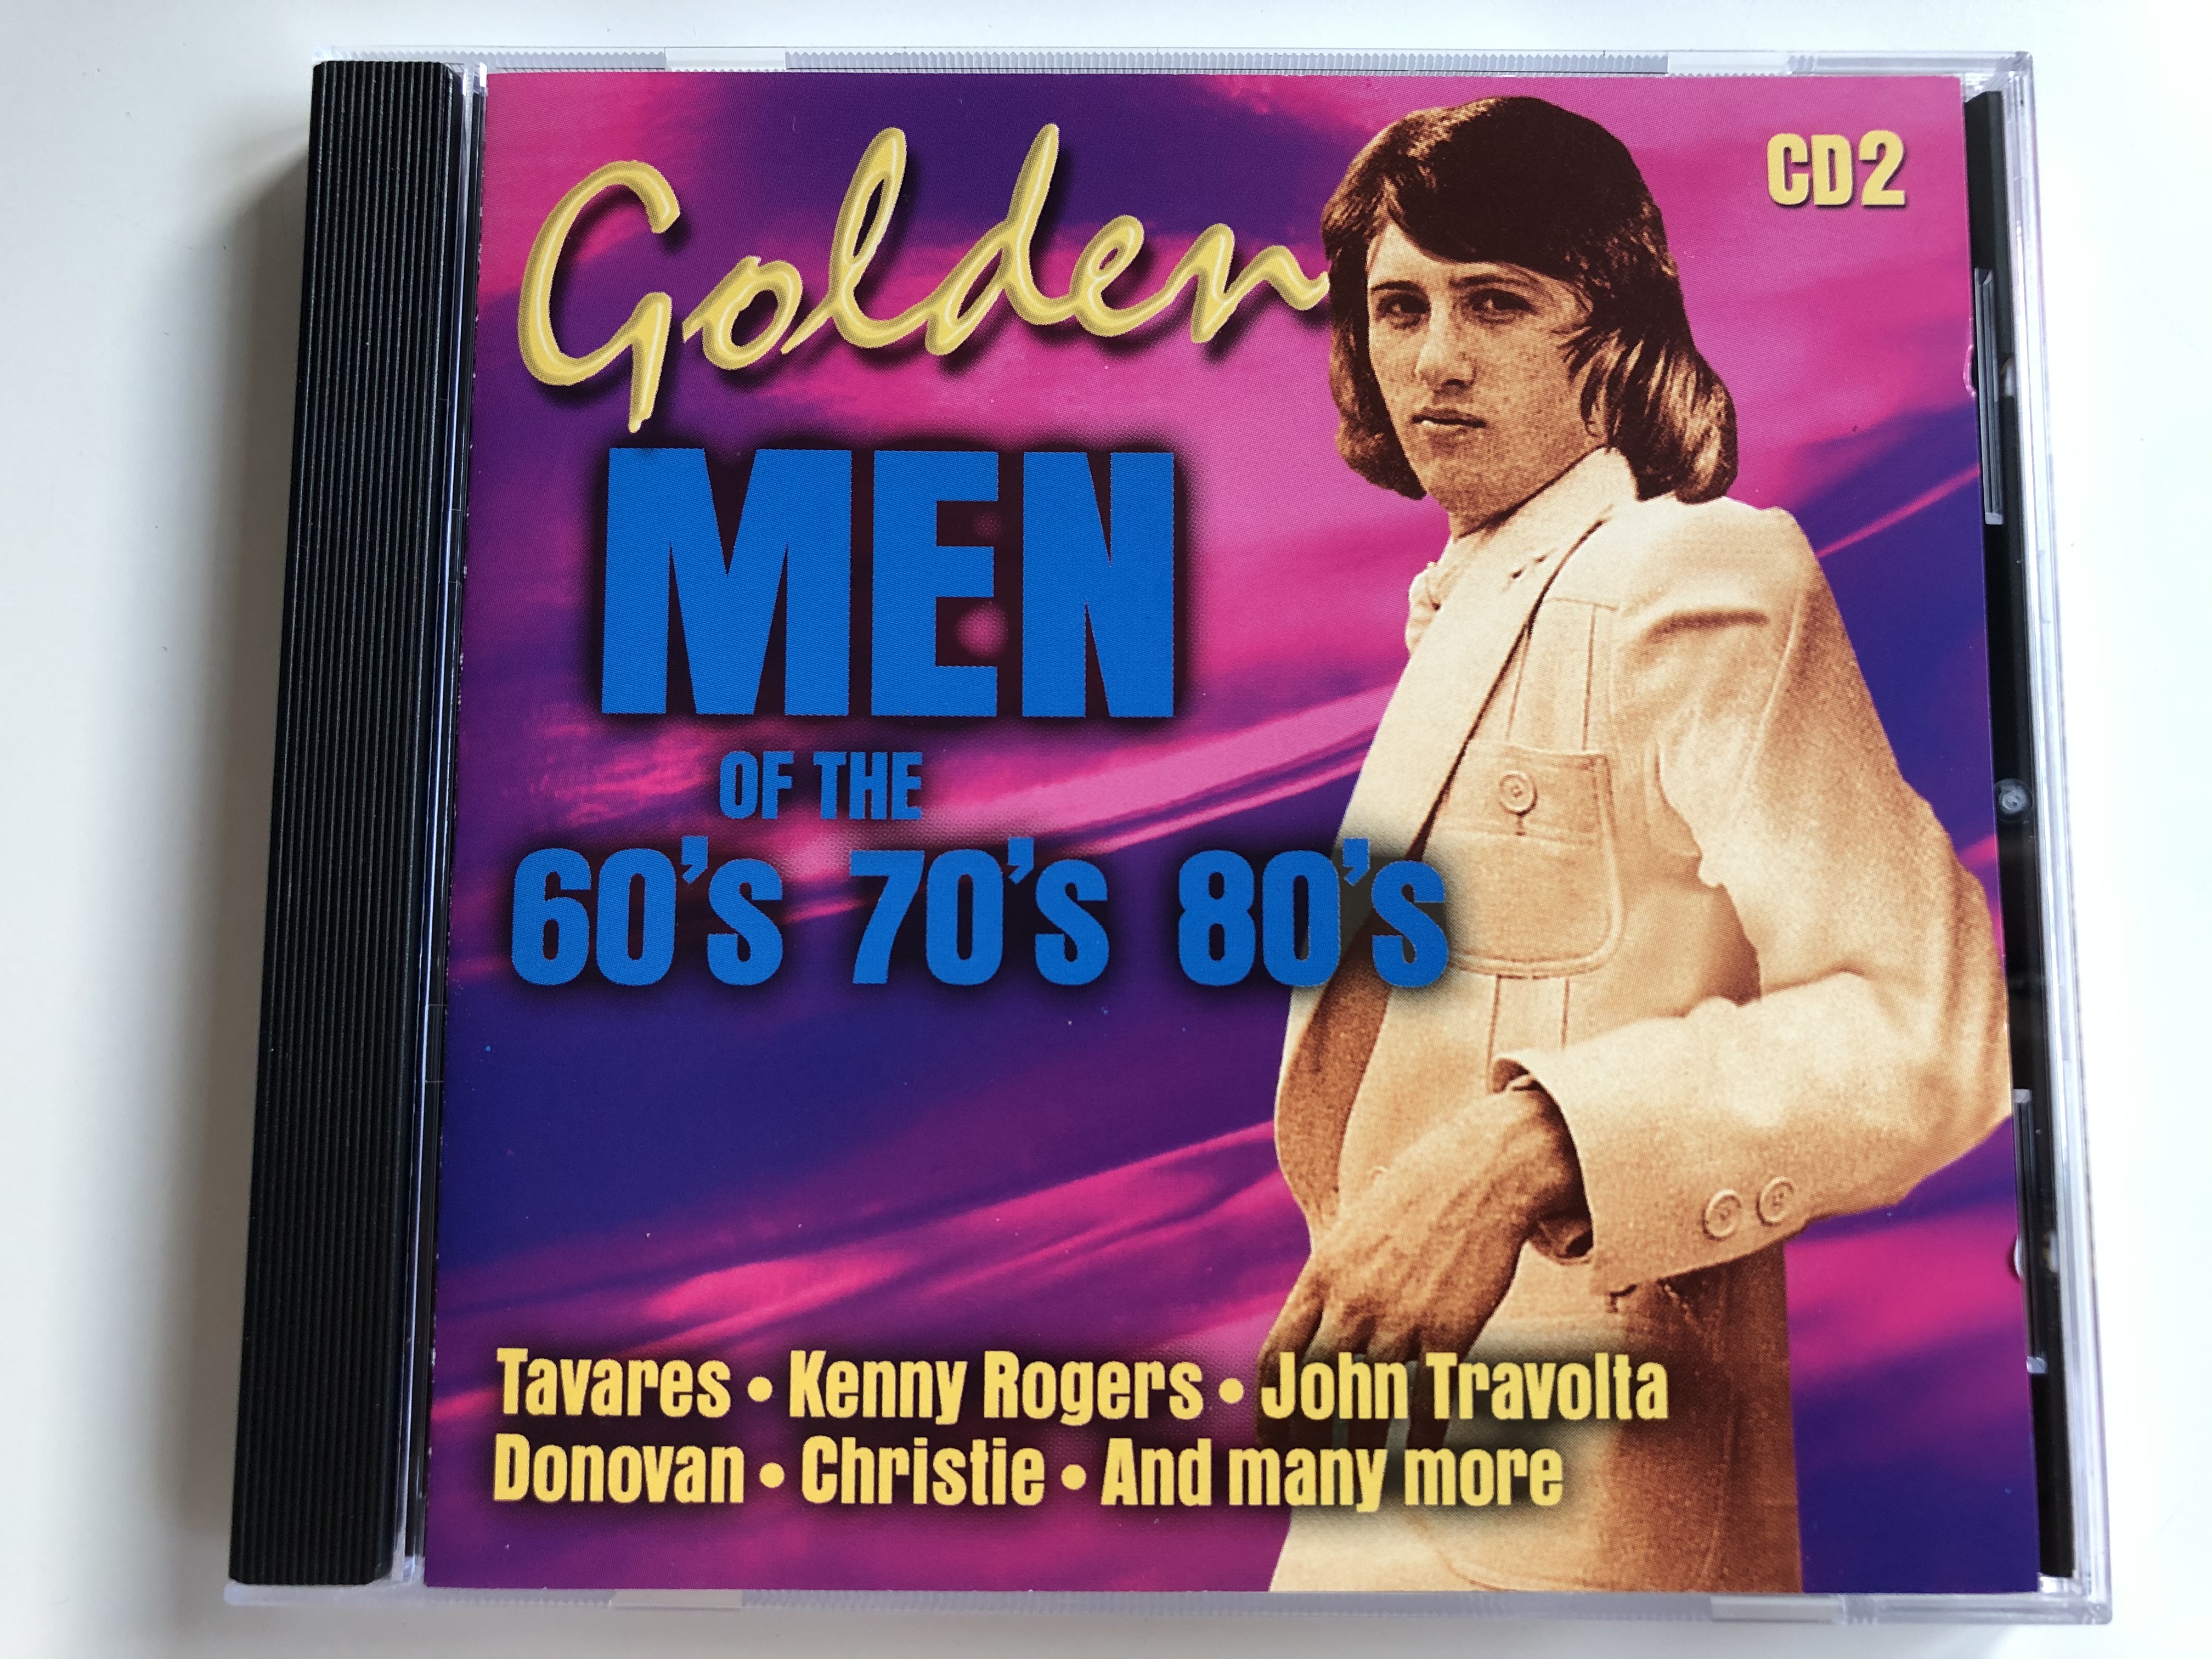 golden-men-of-the-60-s-70-s-80-s-cd2-tavares-kenny-rogers-john-travolta-donovan-christie-and-many-more-point-entertainment-ltd.-audio-cd-1999-6031-1-.jpg